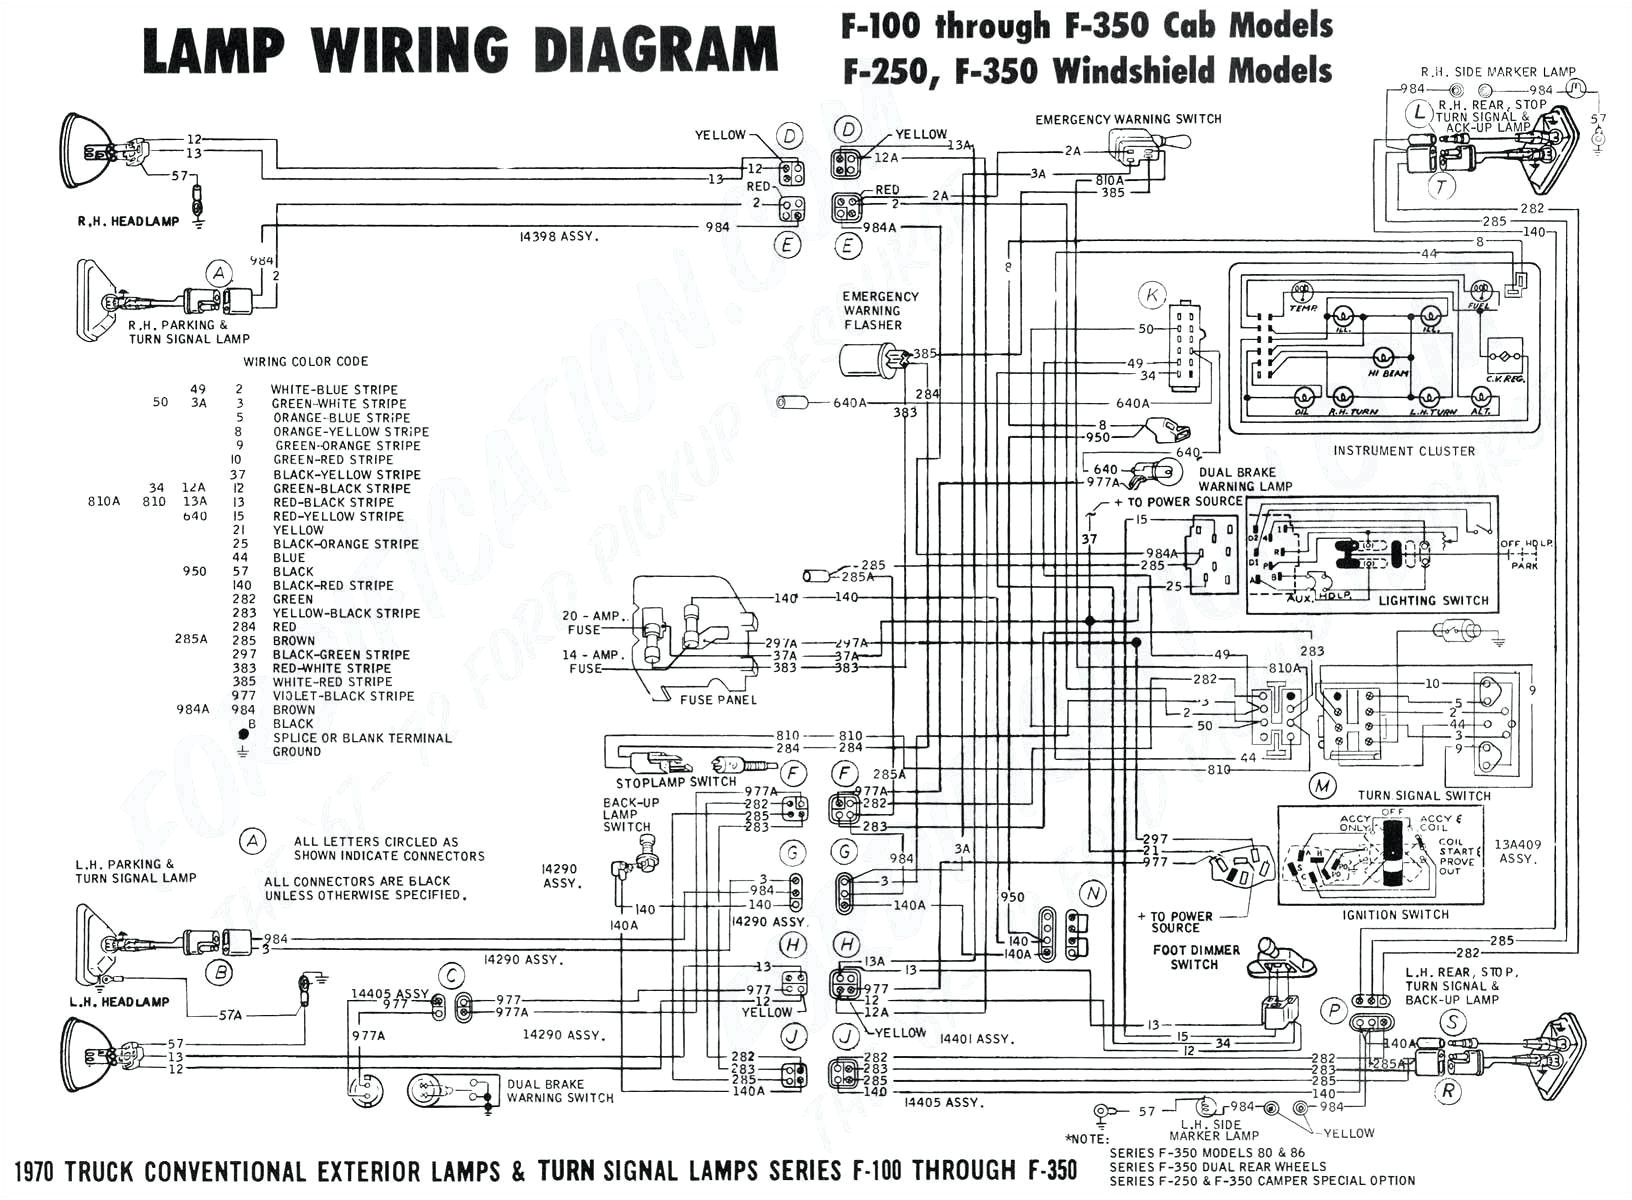 m813 wiring diagram wiring diagram operations m813 wiring diagram wiring diagram preview m813 wiring diagram